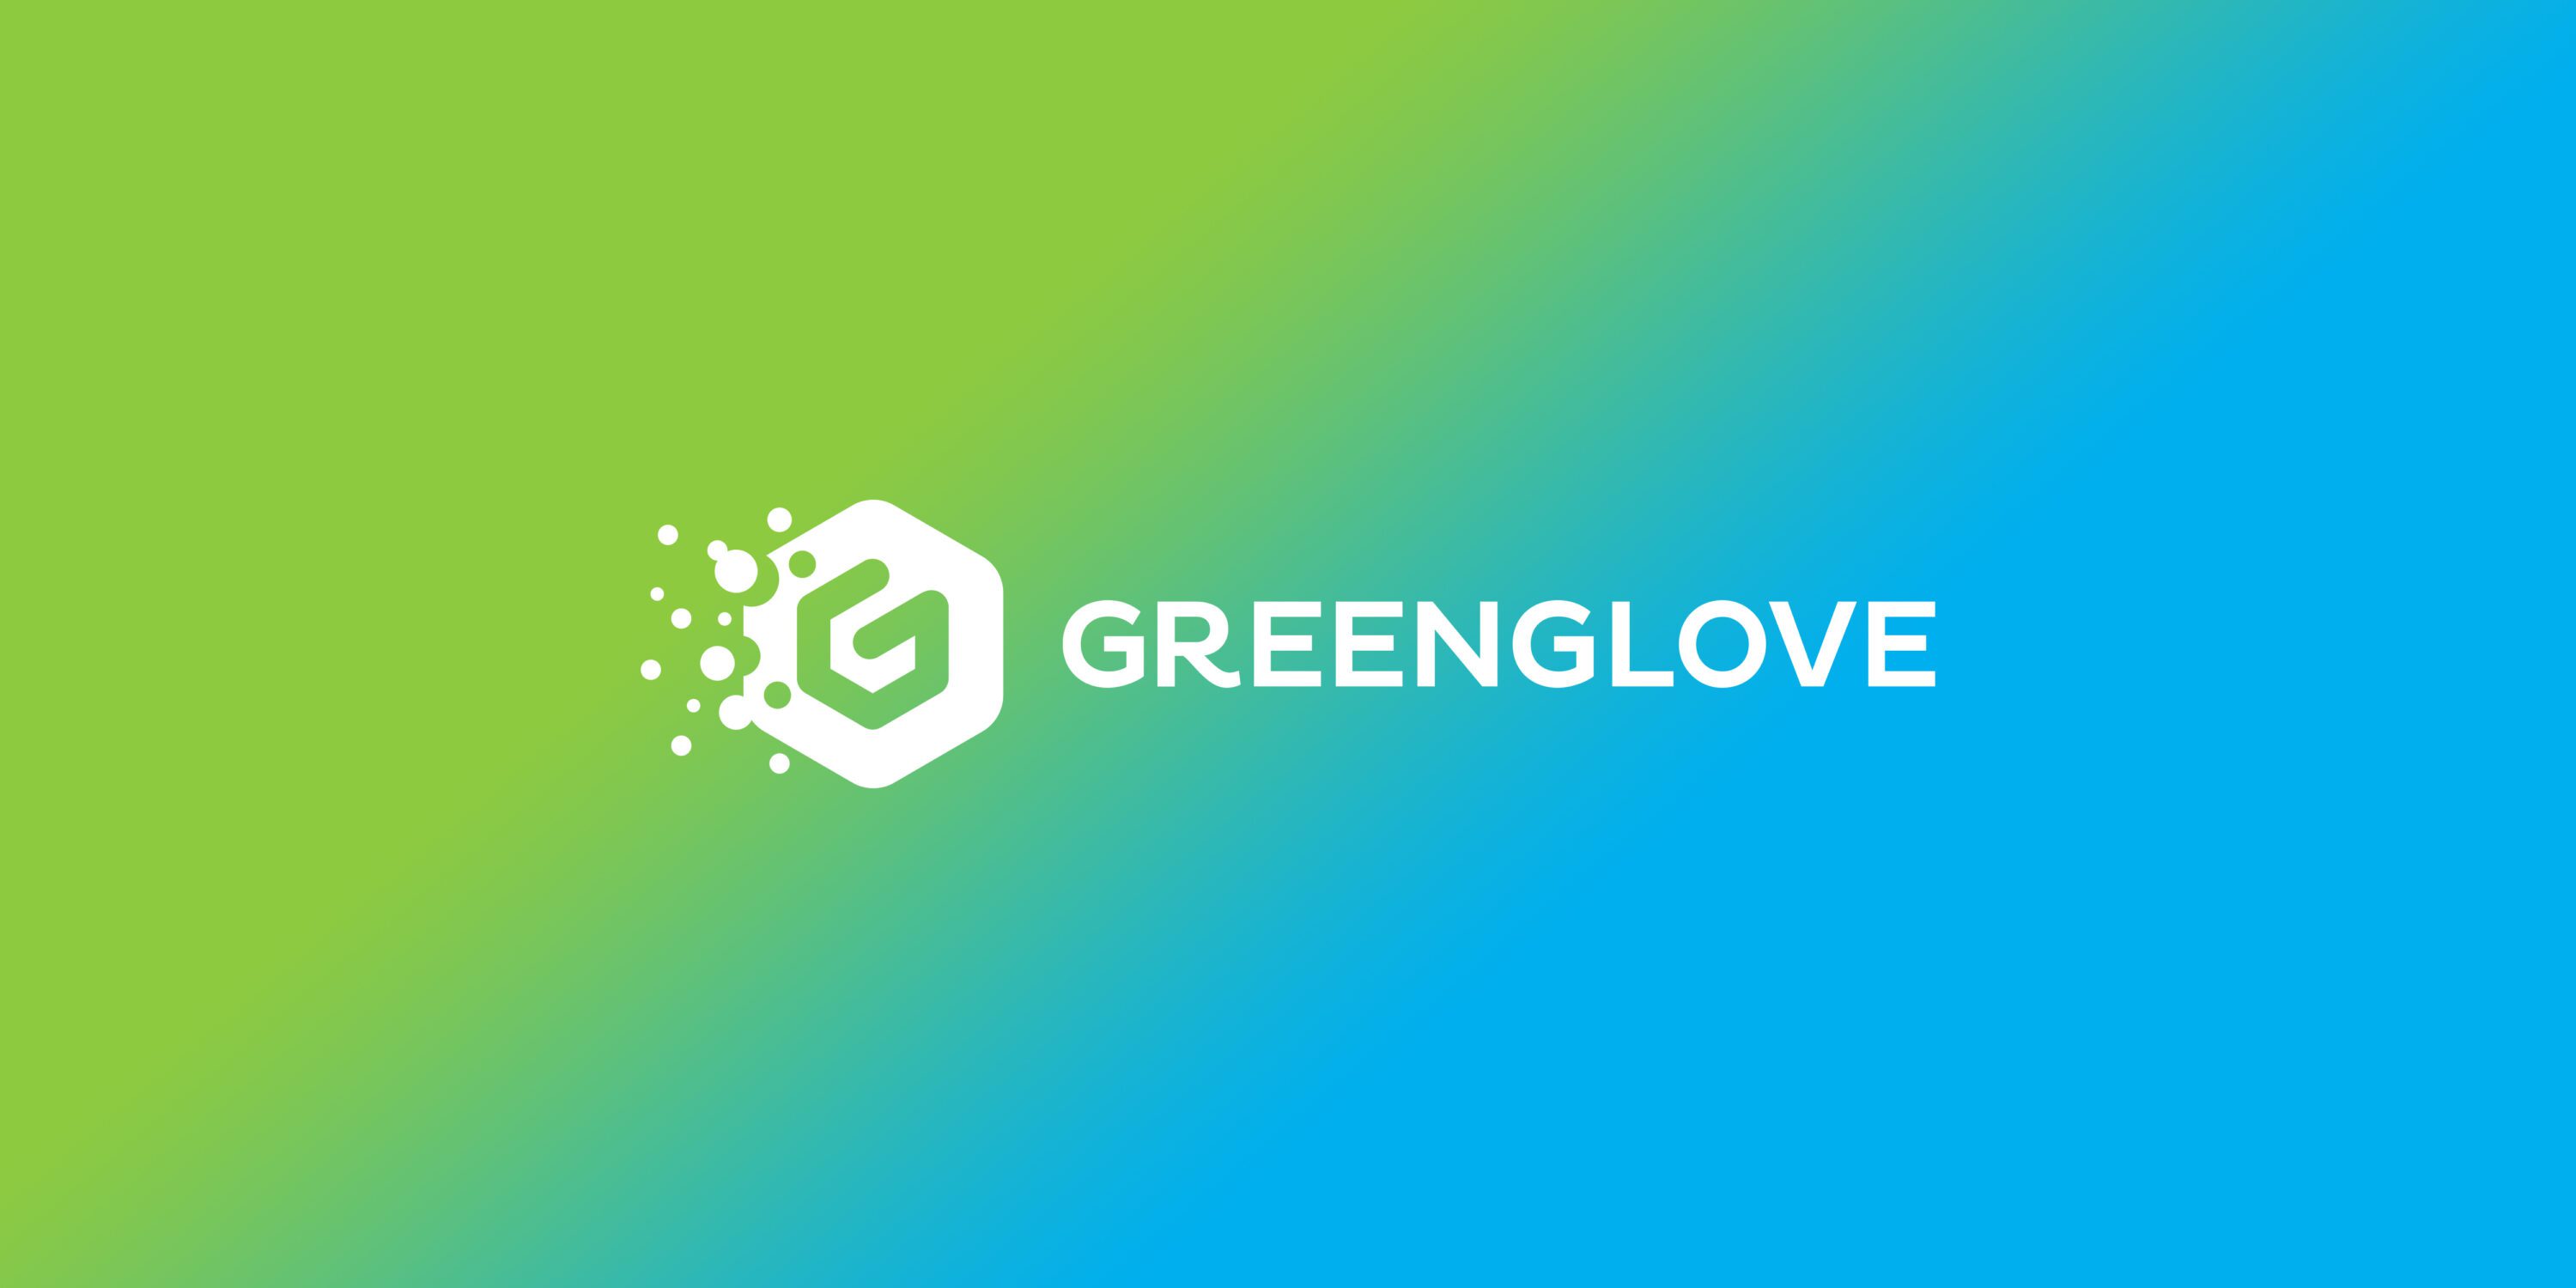 GreenGlove branding and logo design